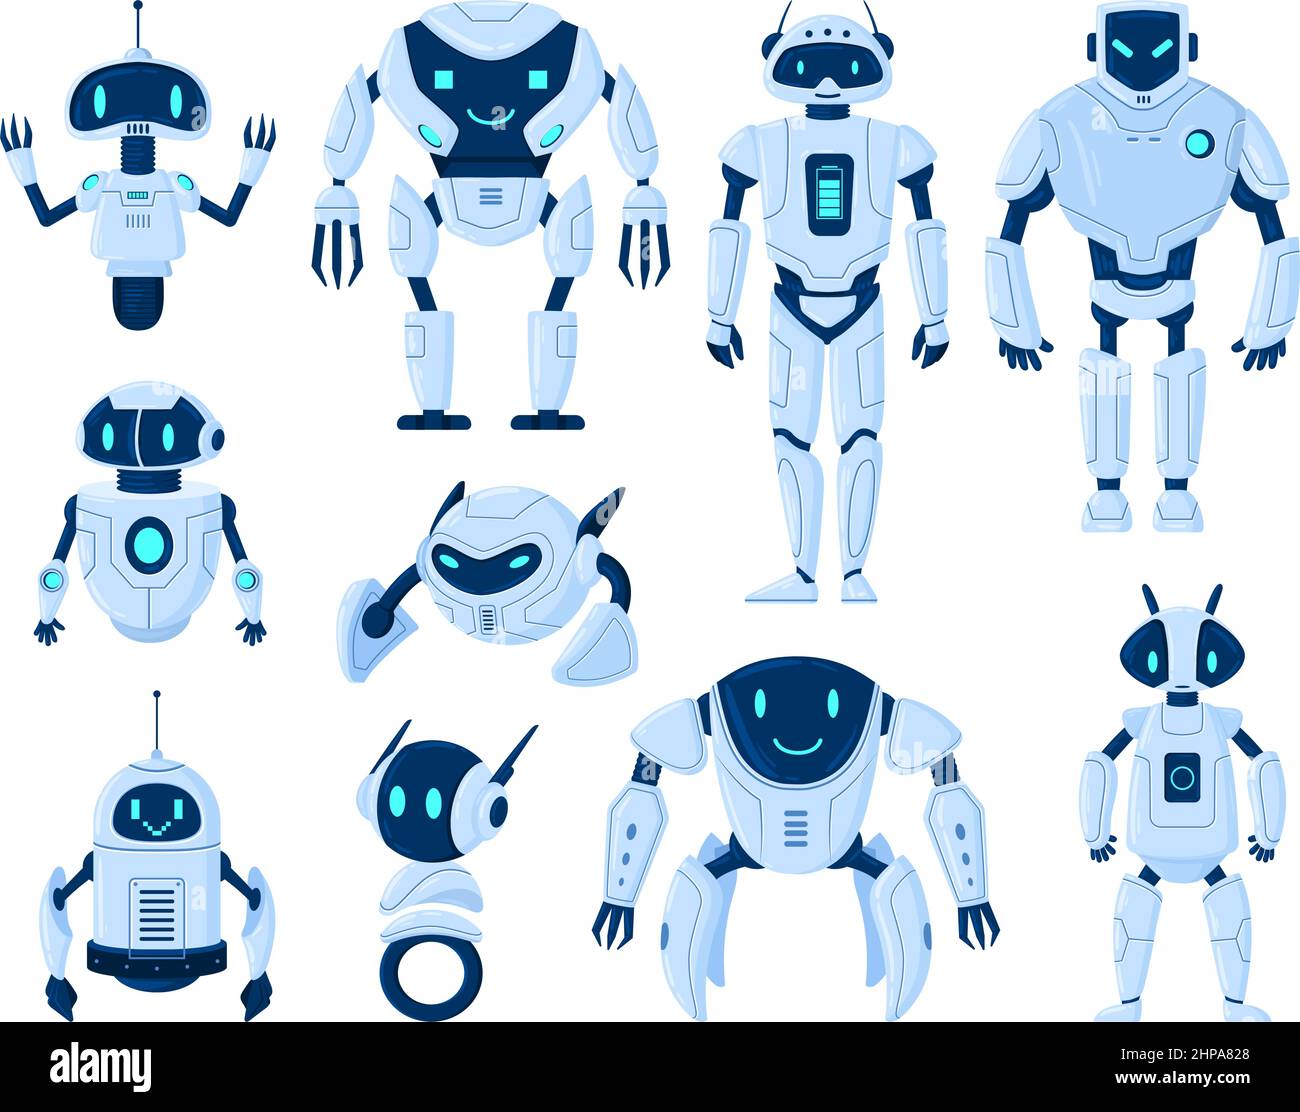 Cartoon robots, cyborg machine artificial intelligence characters. Digital cyborgs and modern technology vector illustration set. Robot Stock Vector Image & Art - Alamy